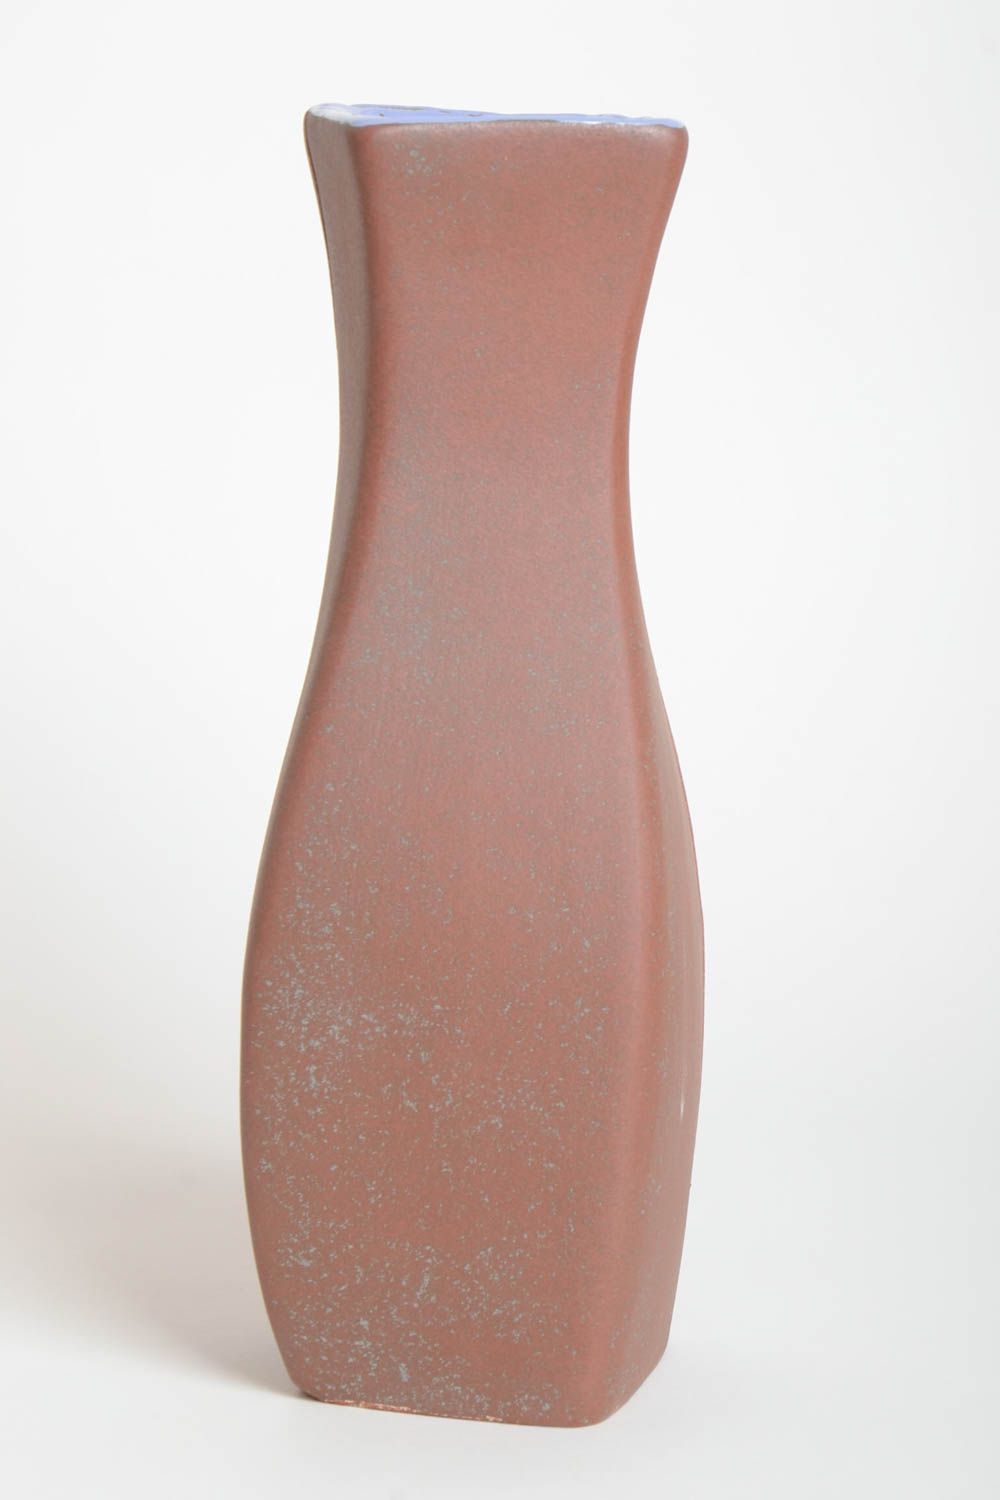 Handmade Keramik Vase Haus Deko originelle ausgefallene Vase bemalt 2 L groß  foto 4